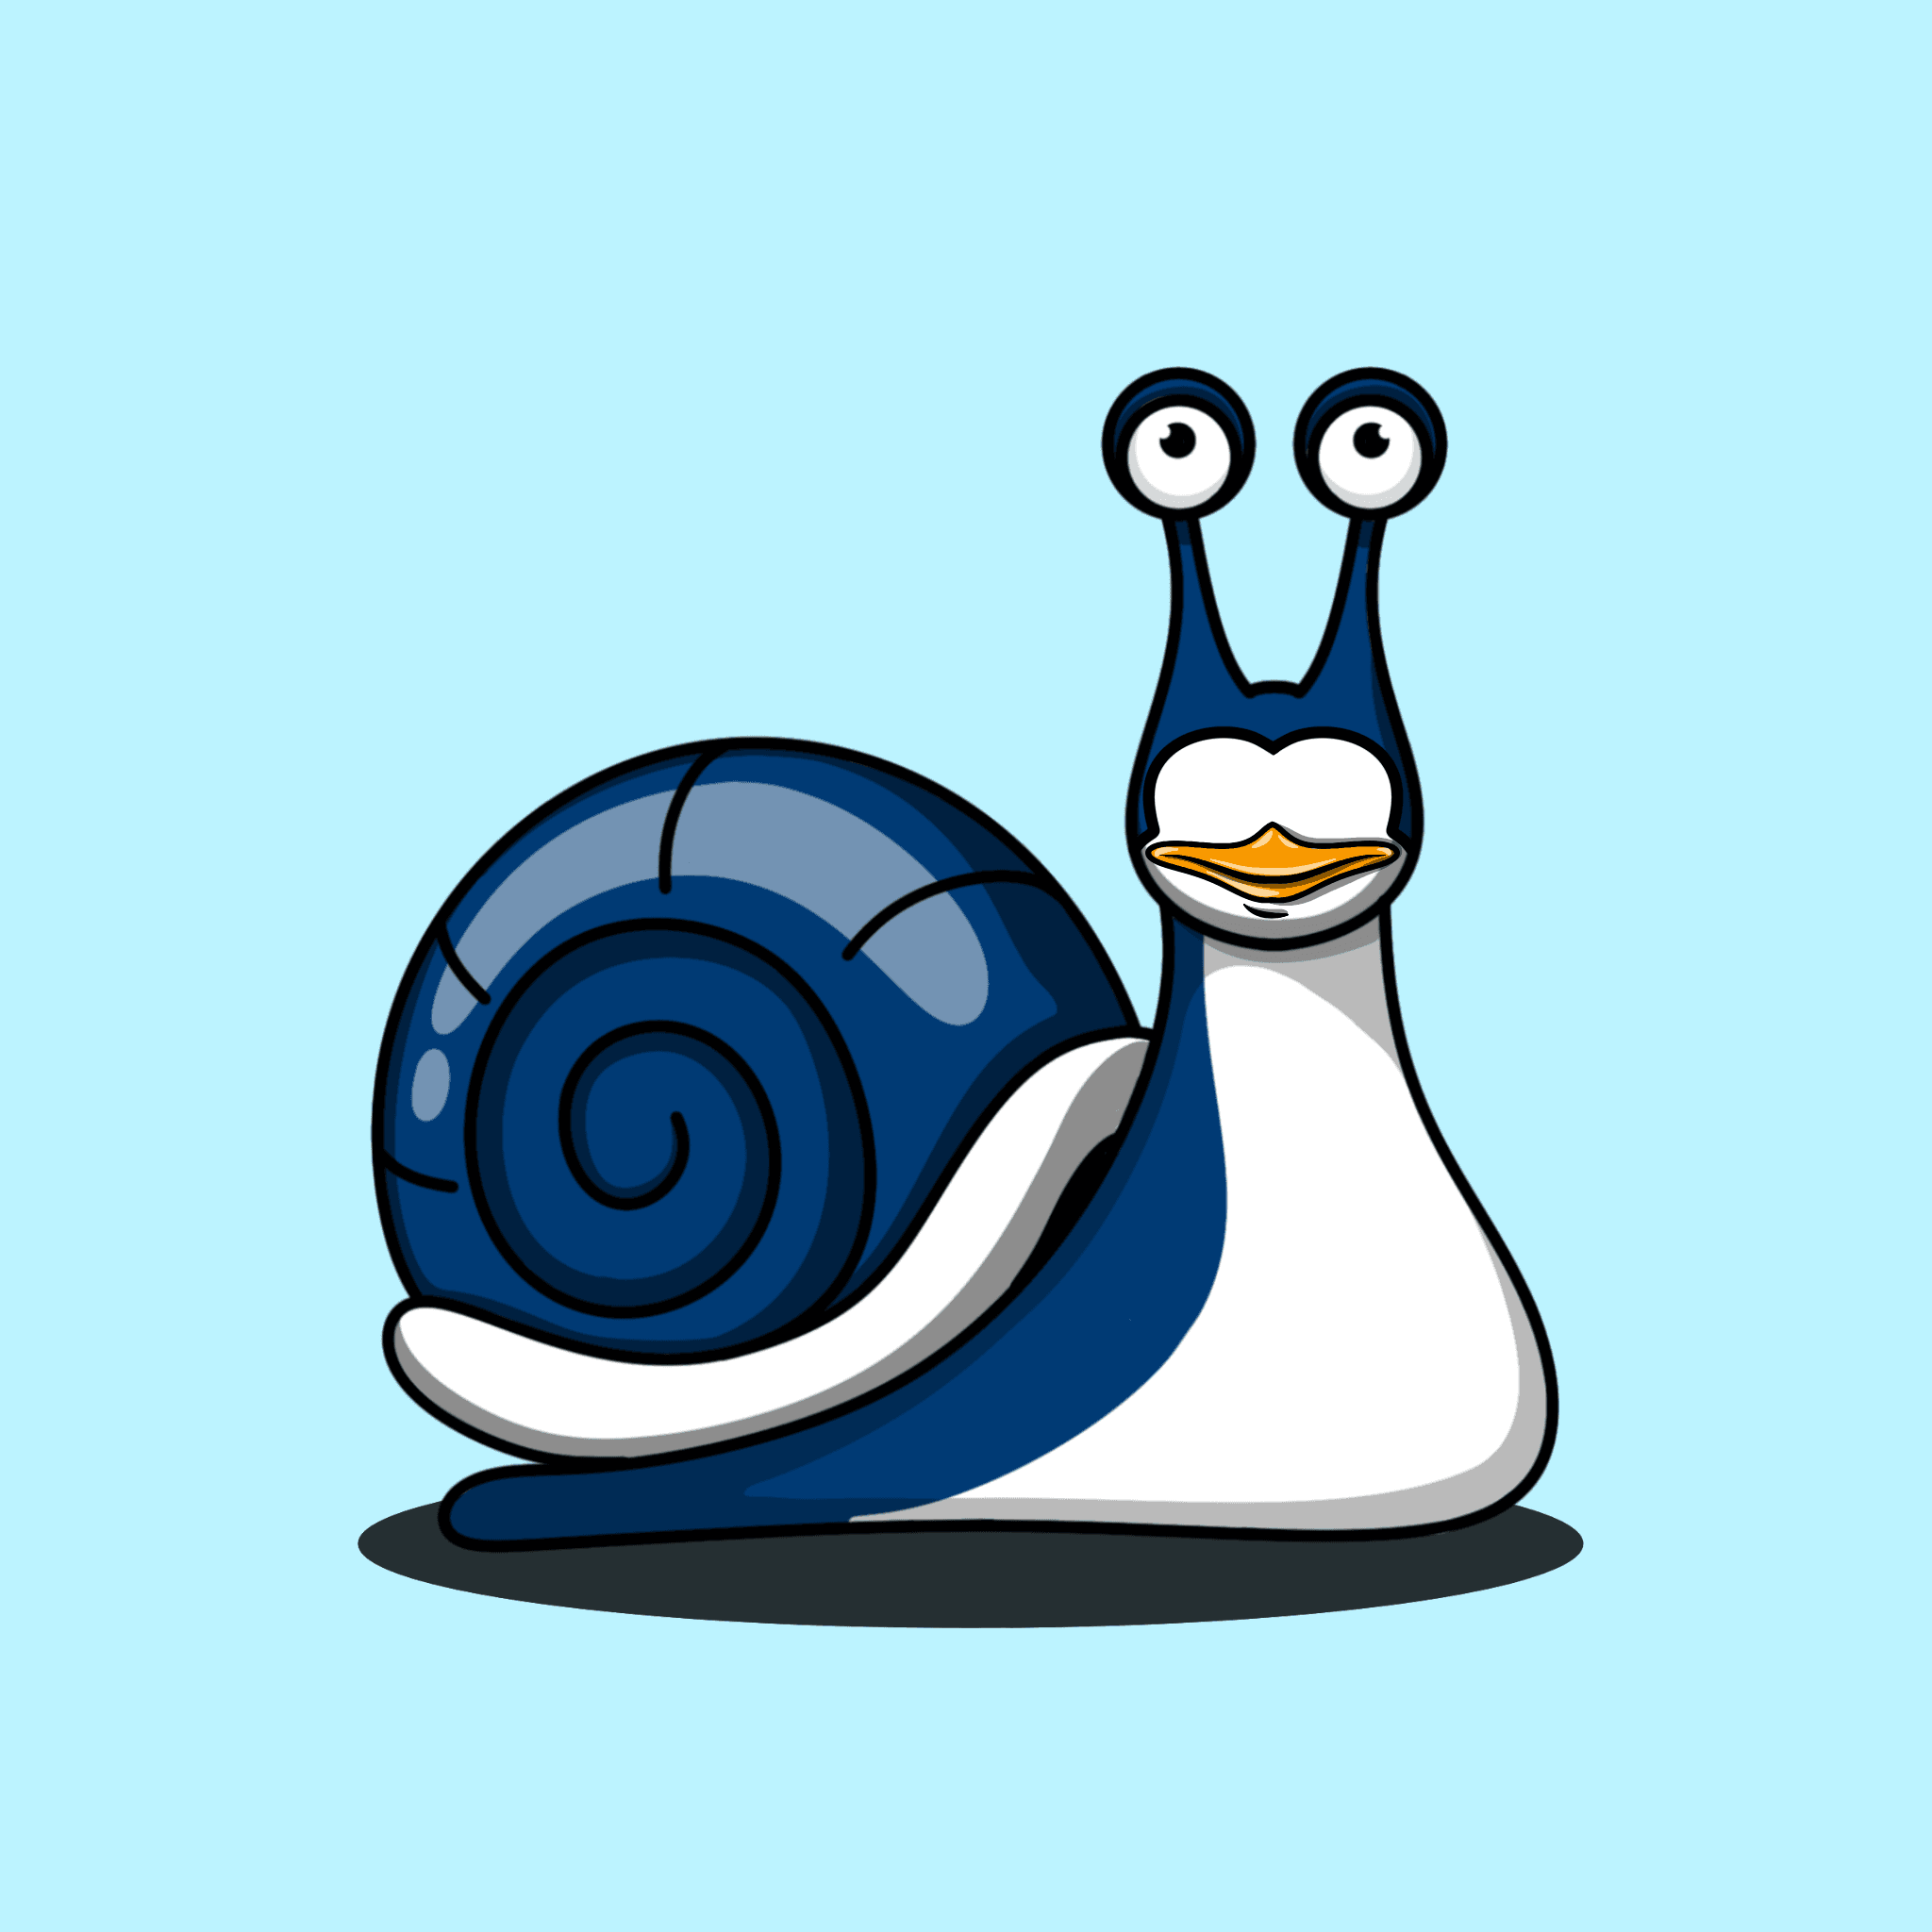 Snail Skin #071